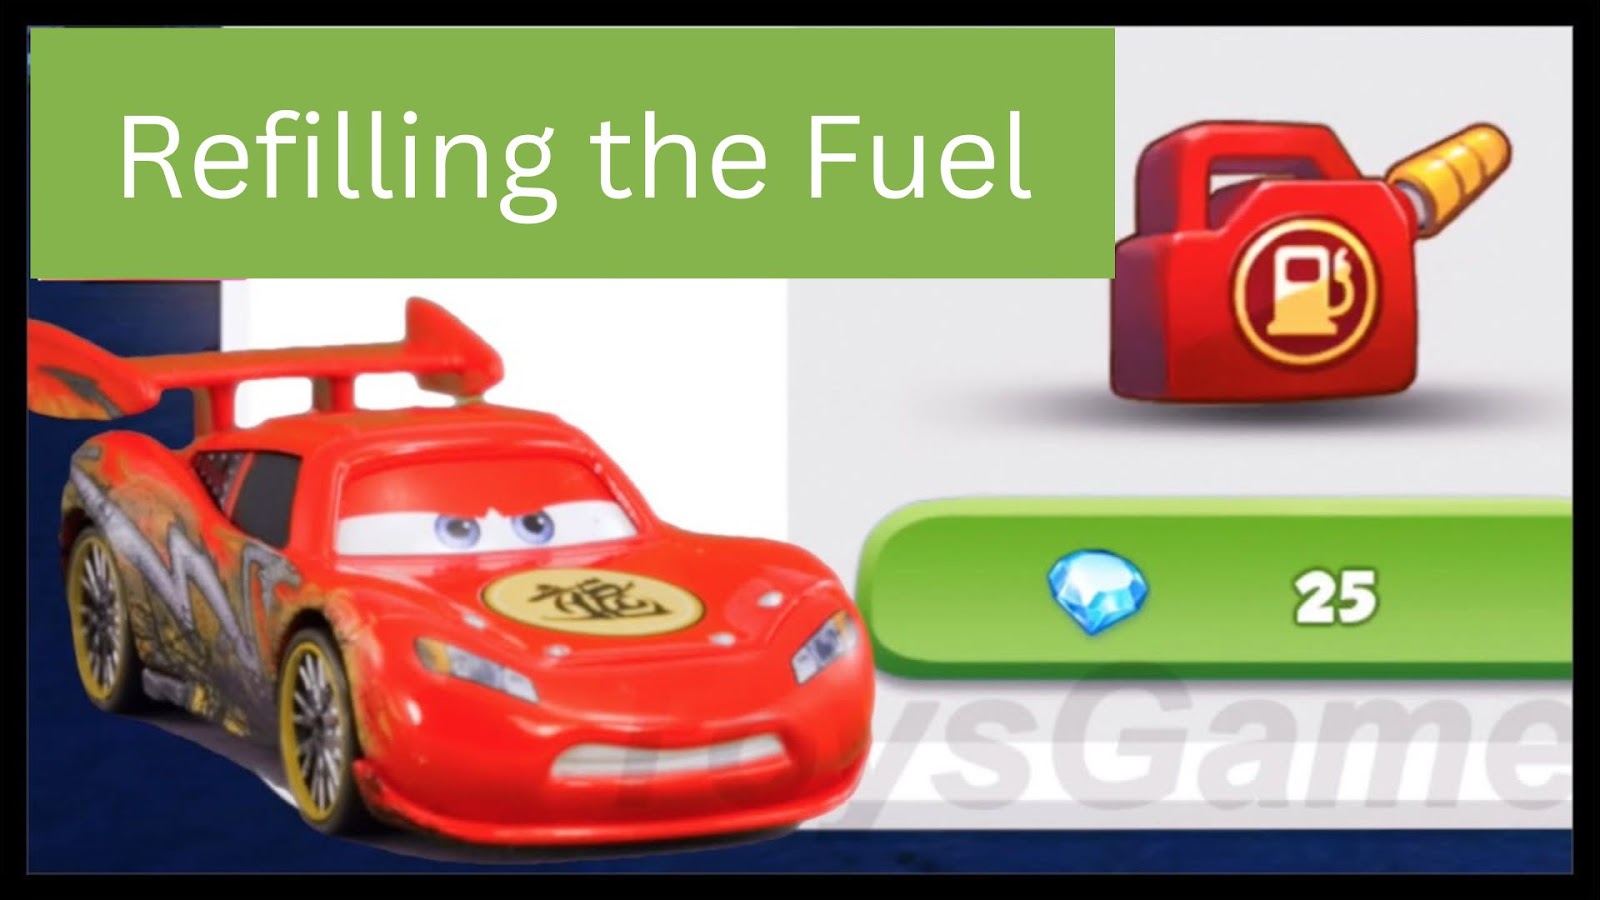  Cars Fast as Lightning Beginner Guide for Refilling the Fuel